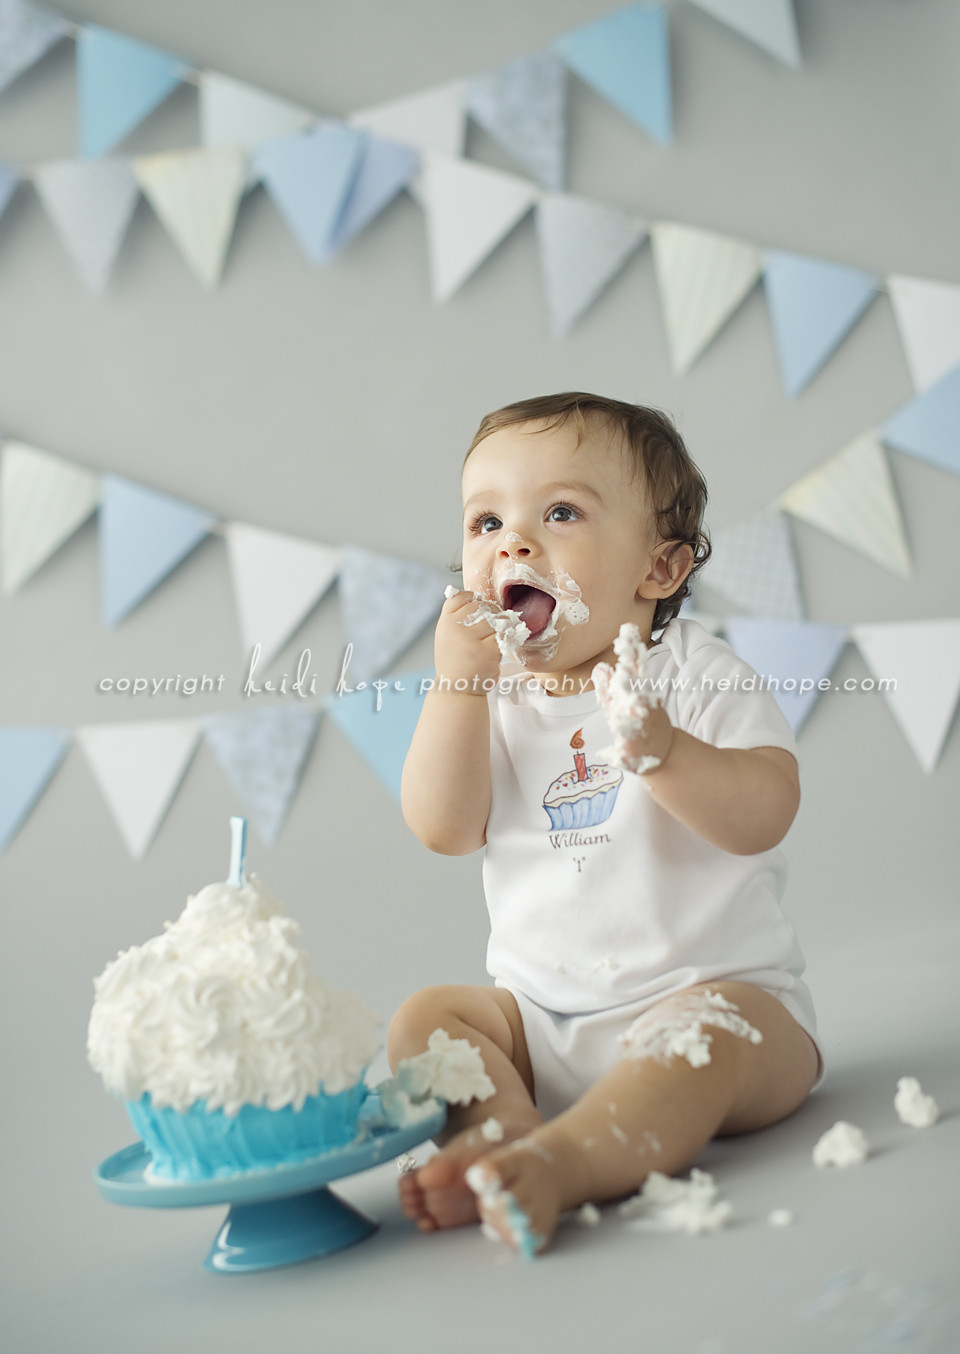 First Birthday Smash Cake
 Baby W turns one year old Massachusetts first birthday